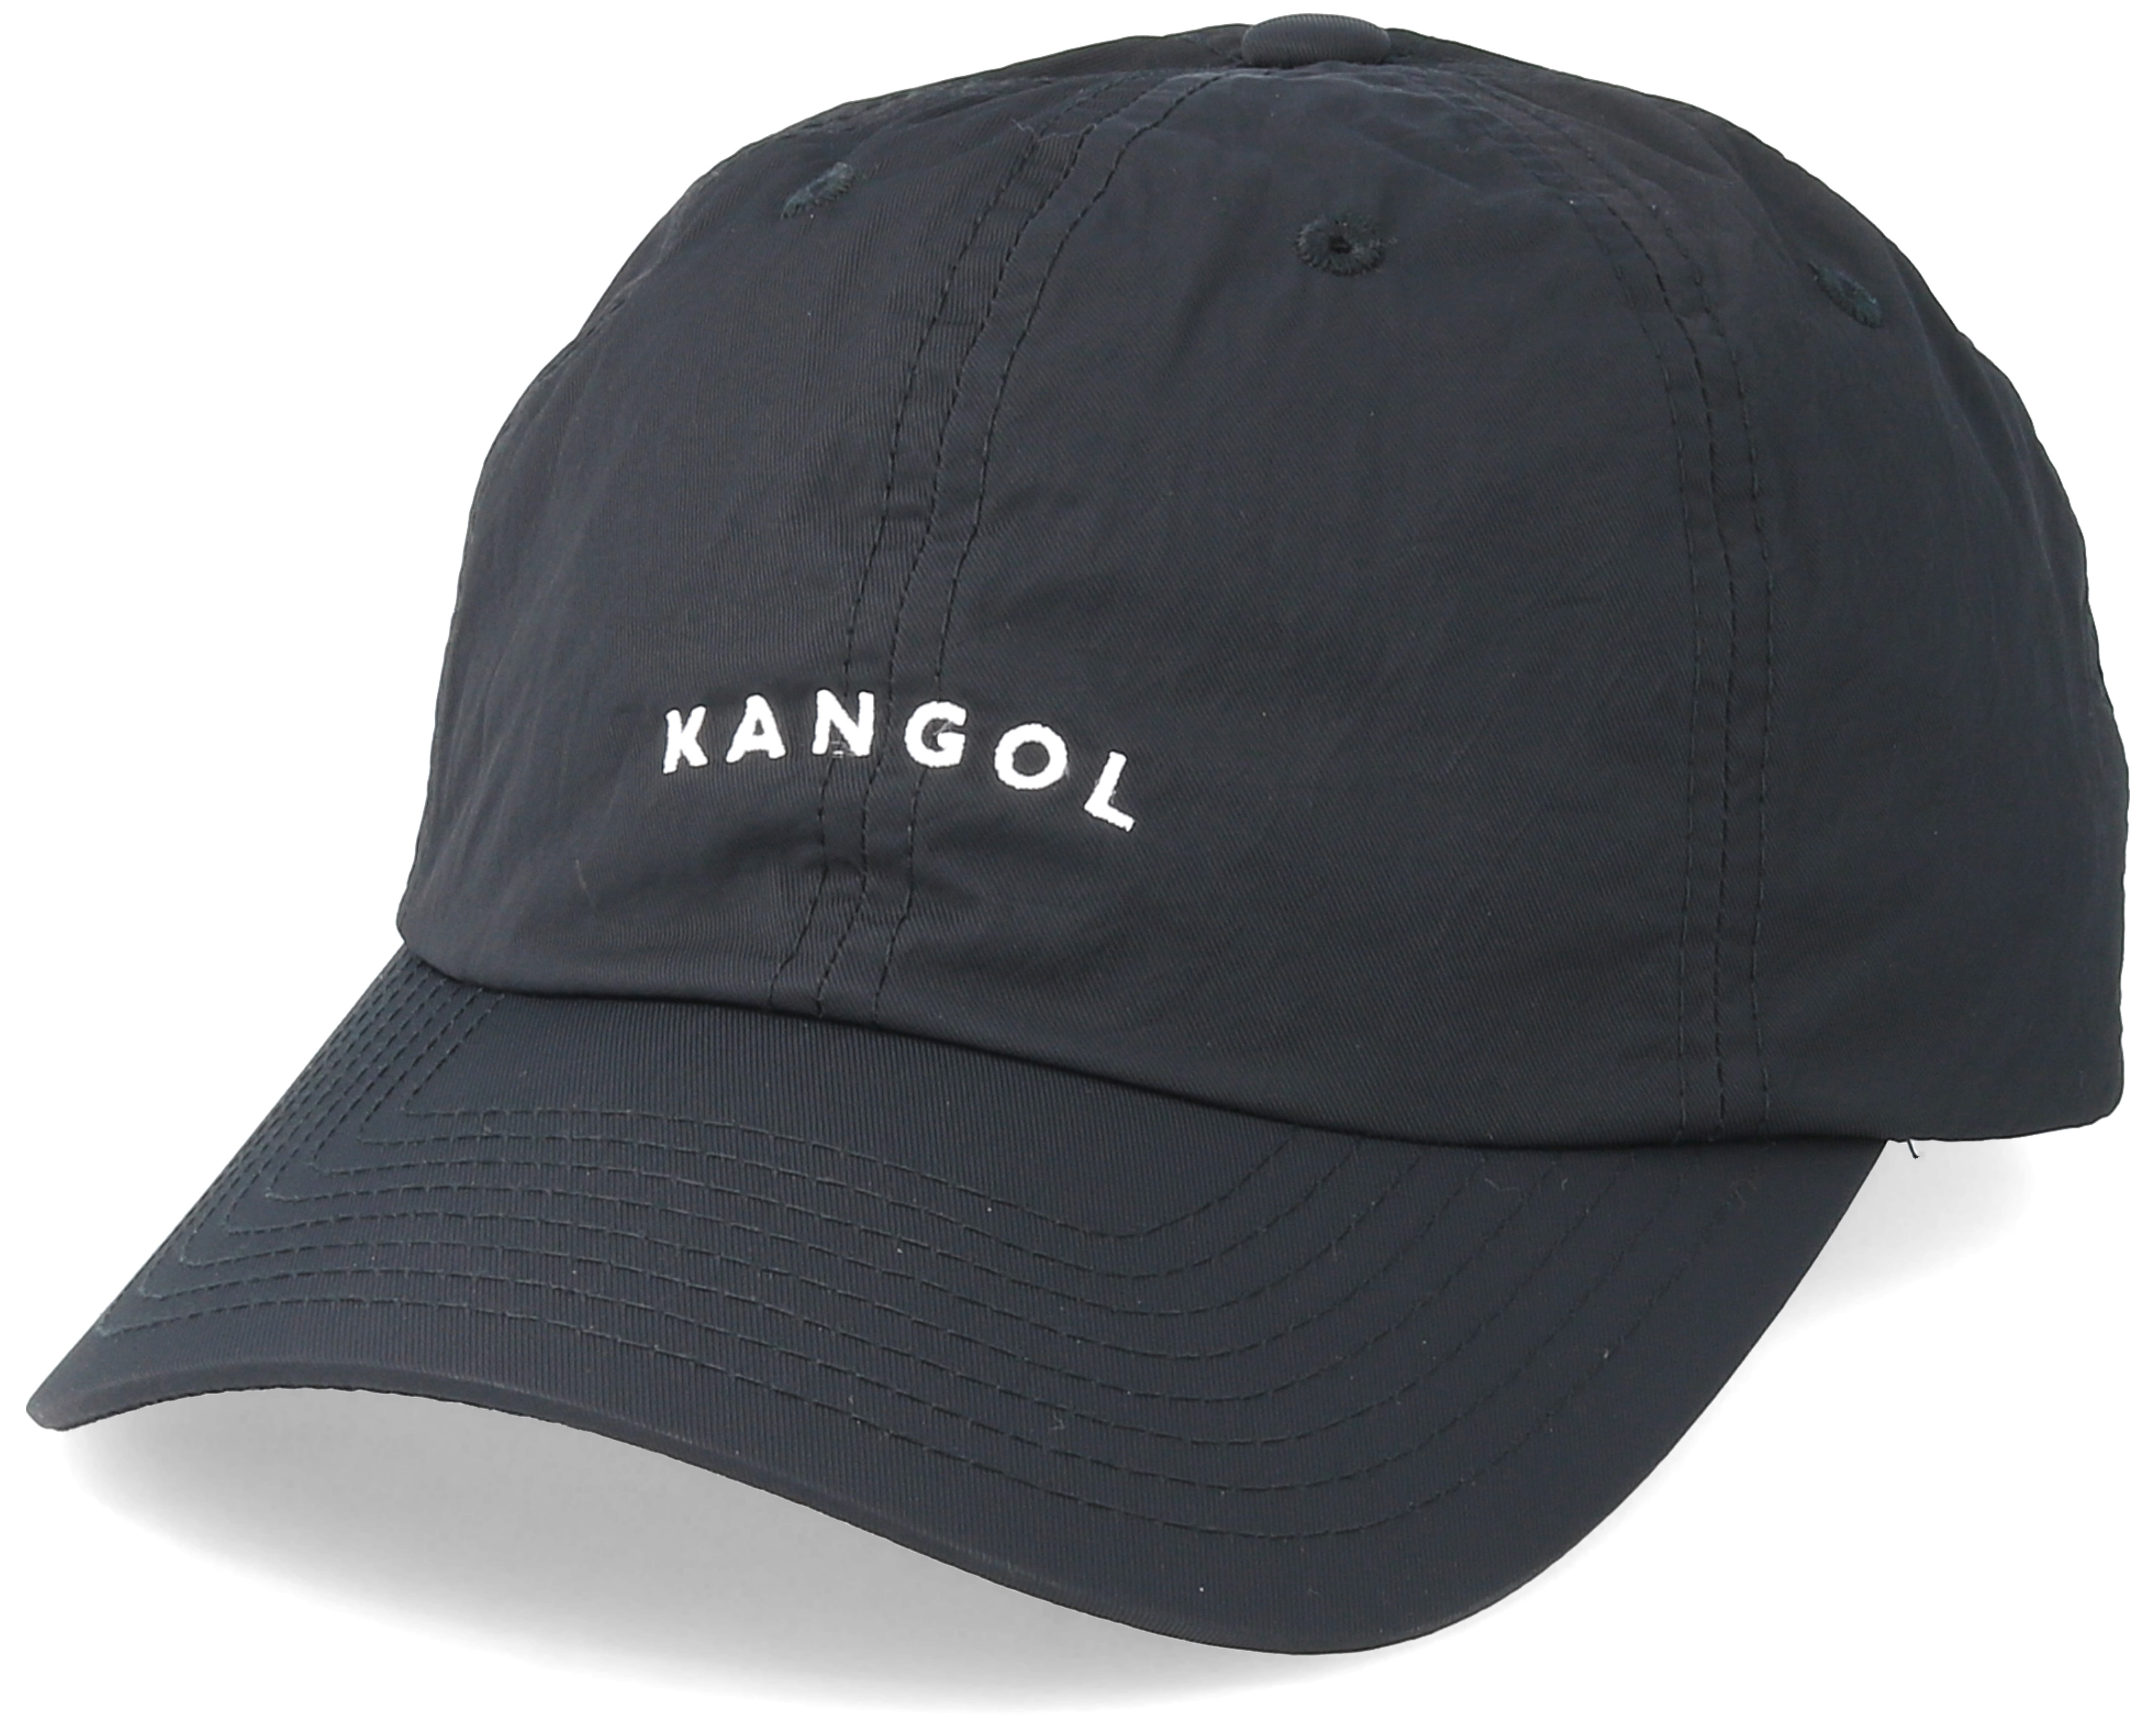 Vintage Baseball Cap Black Adjustable - Kangol